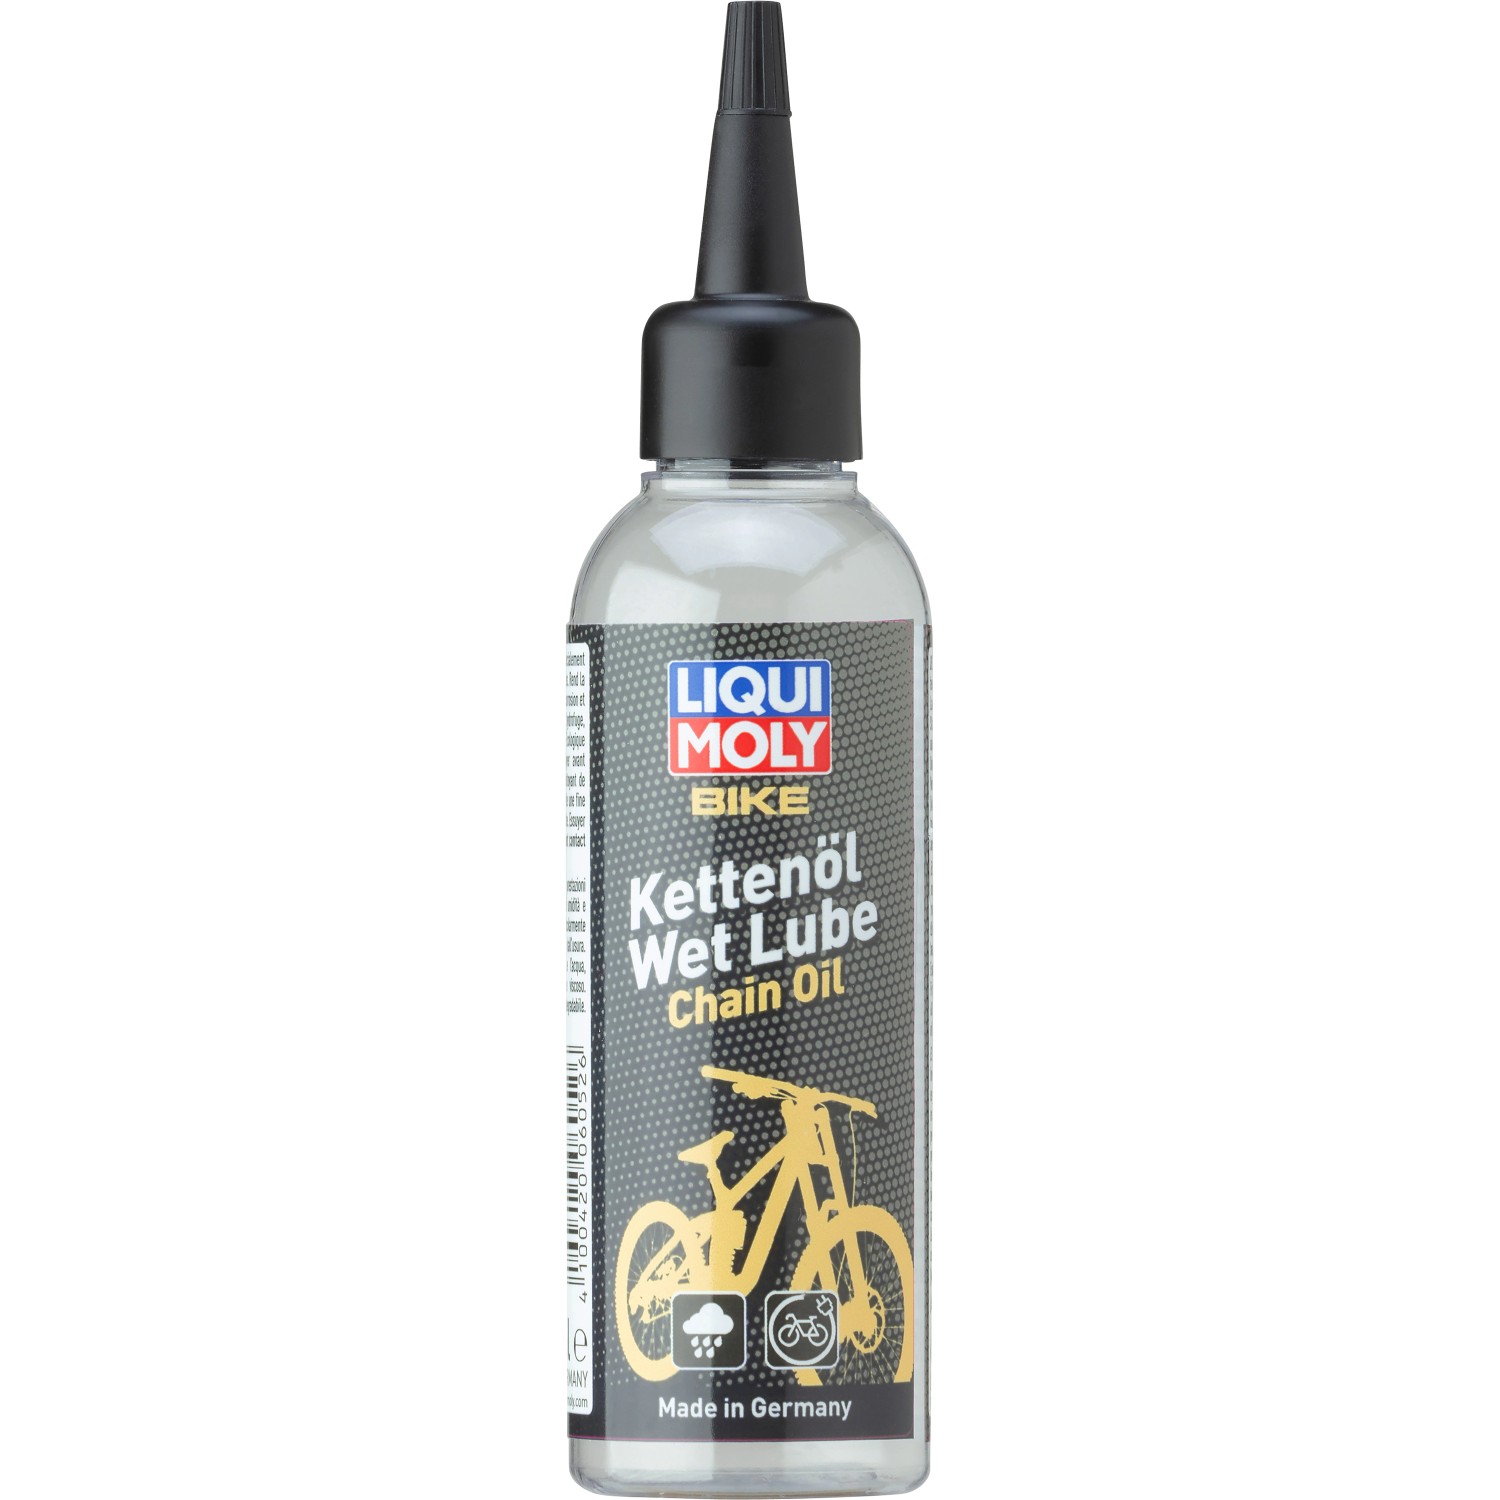 Liqui Moly Bike Kettenöl Wet Lube 100 ml kaufen bei OBI